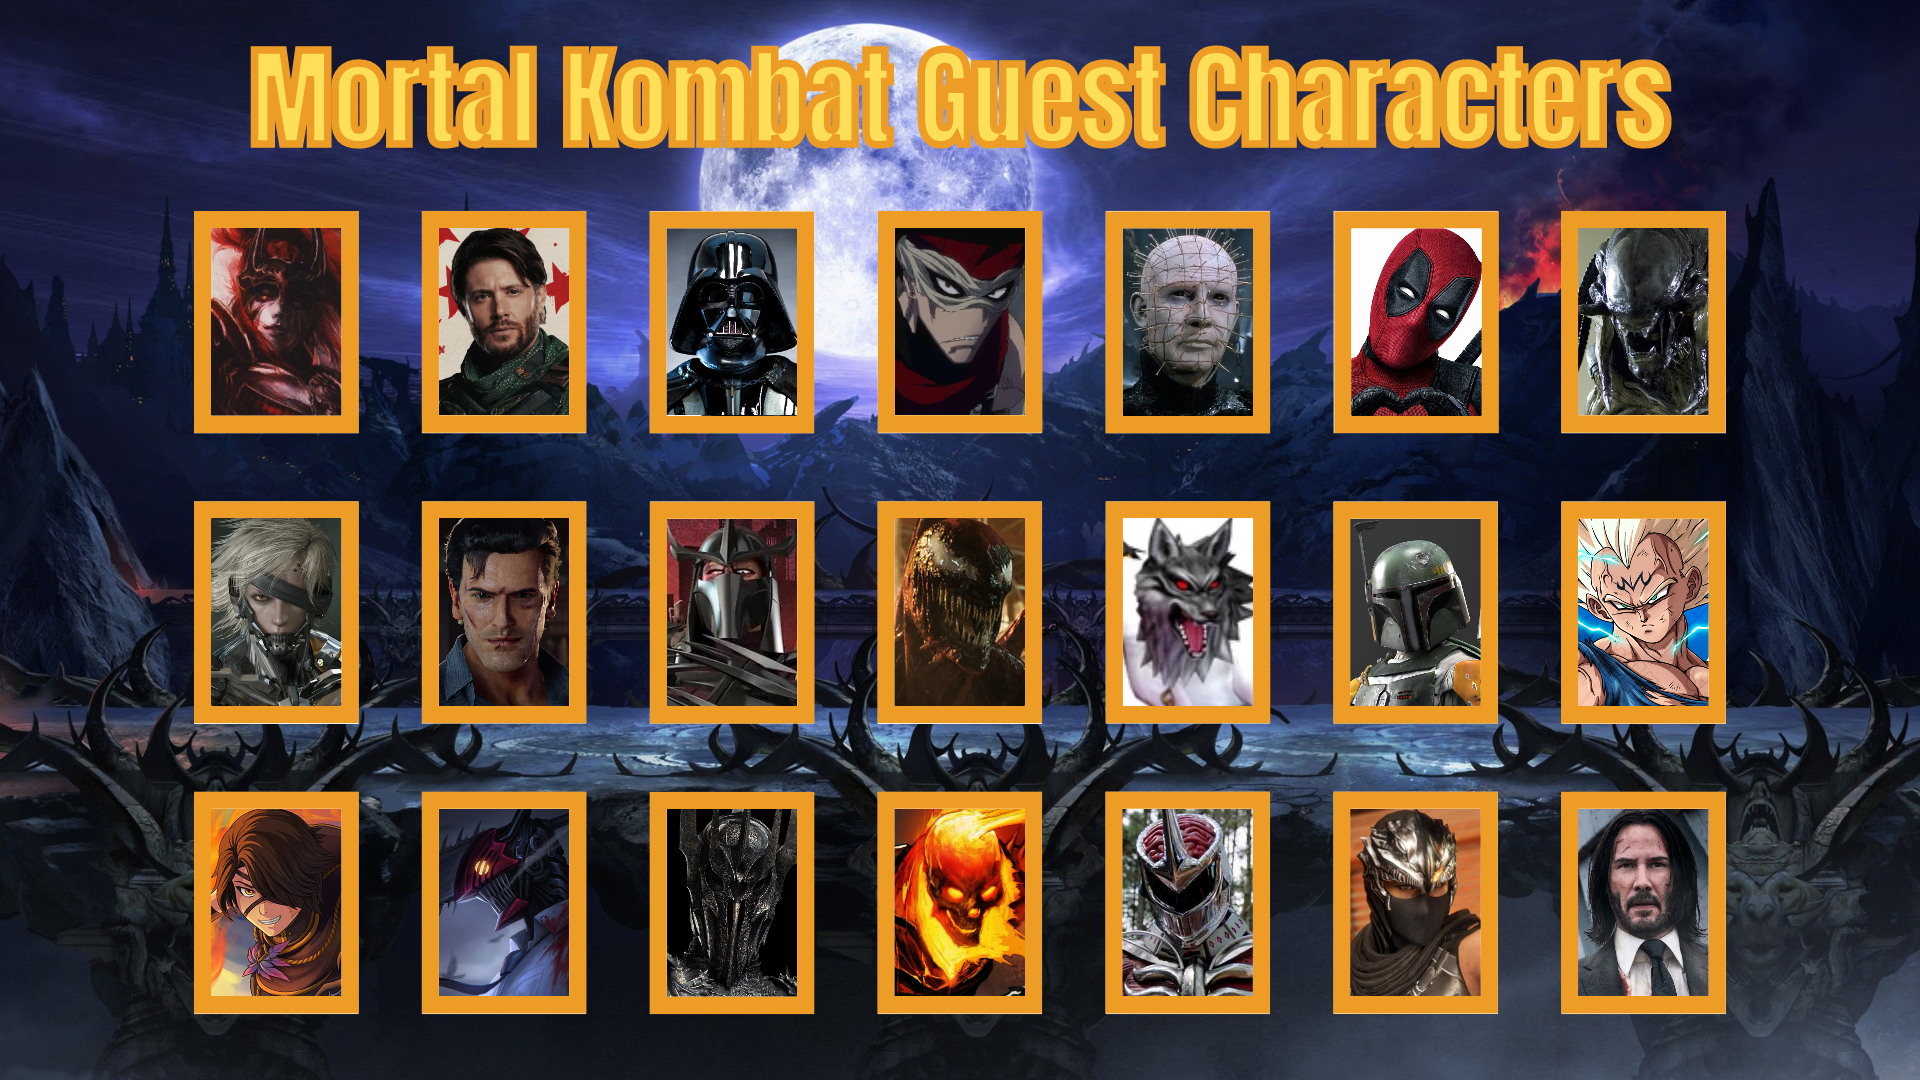 All Confirmed Mortal Kombat 1 DLC and Guest Characters